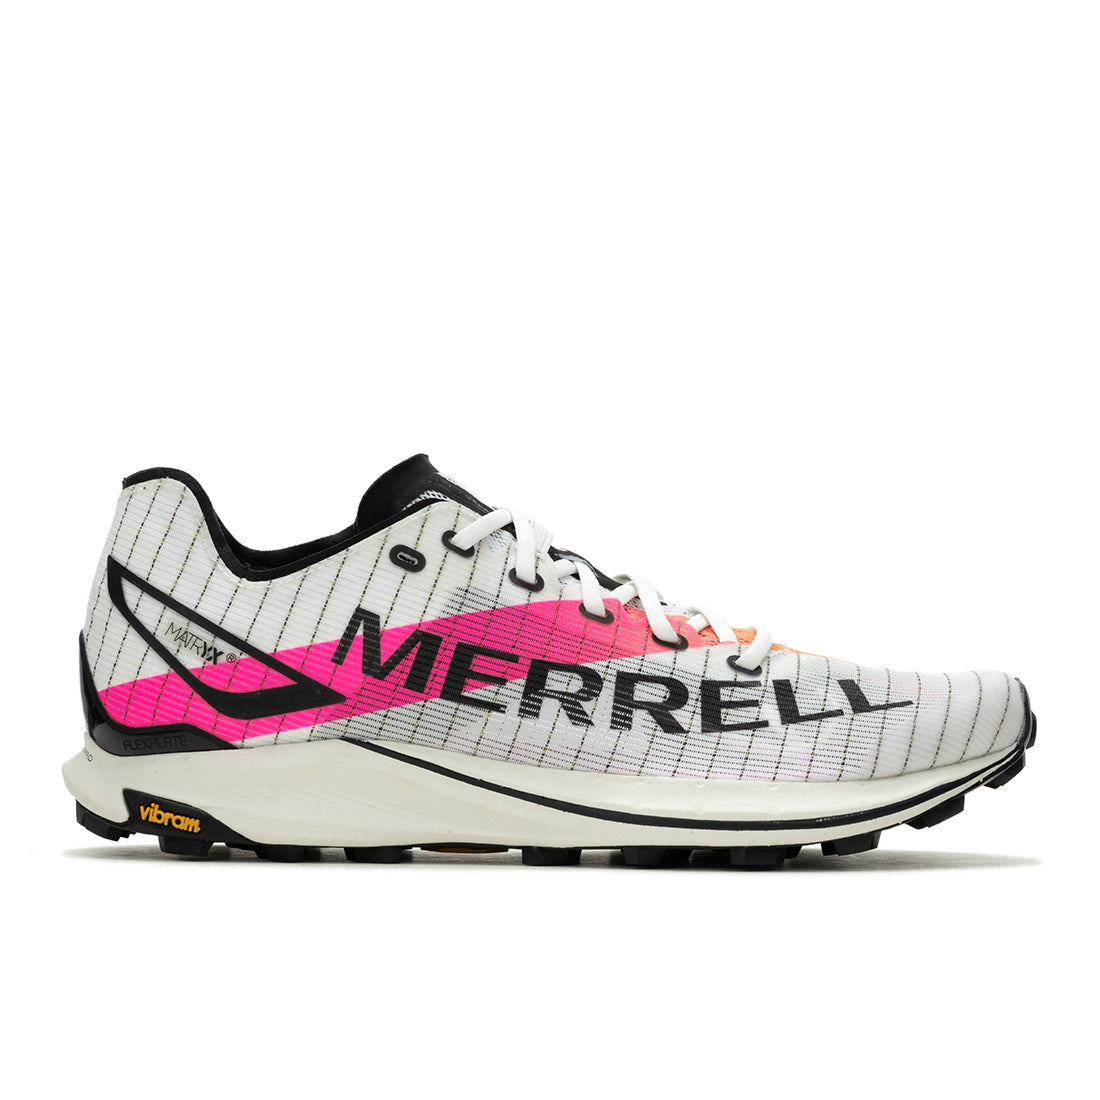 Mtl Skyfire 2 Matryx® - White/Multi Mens Trail Running Shoes